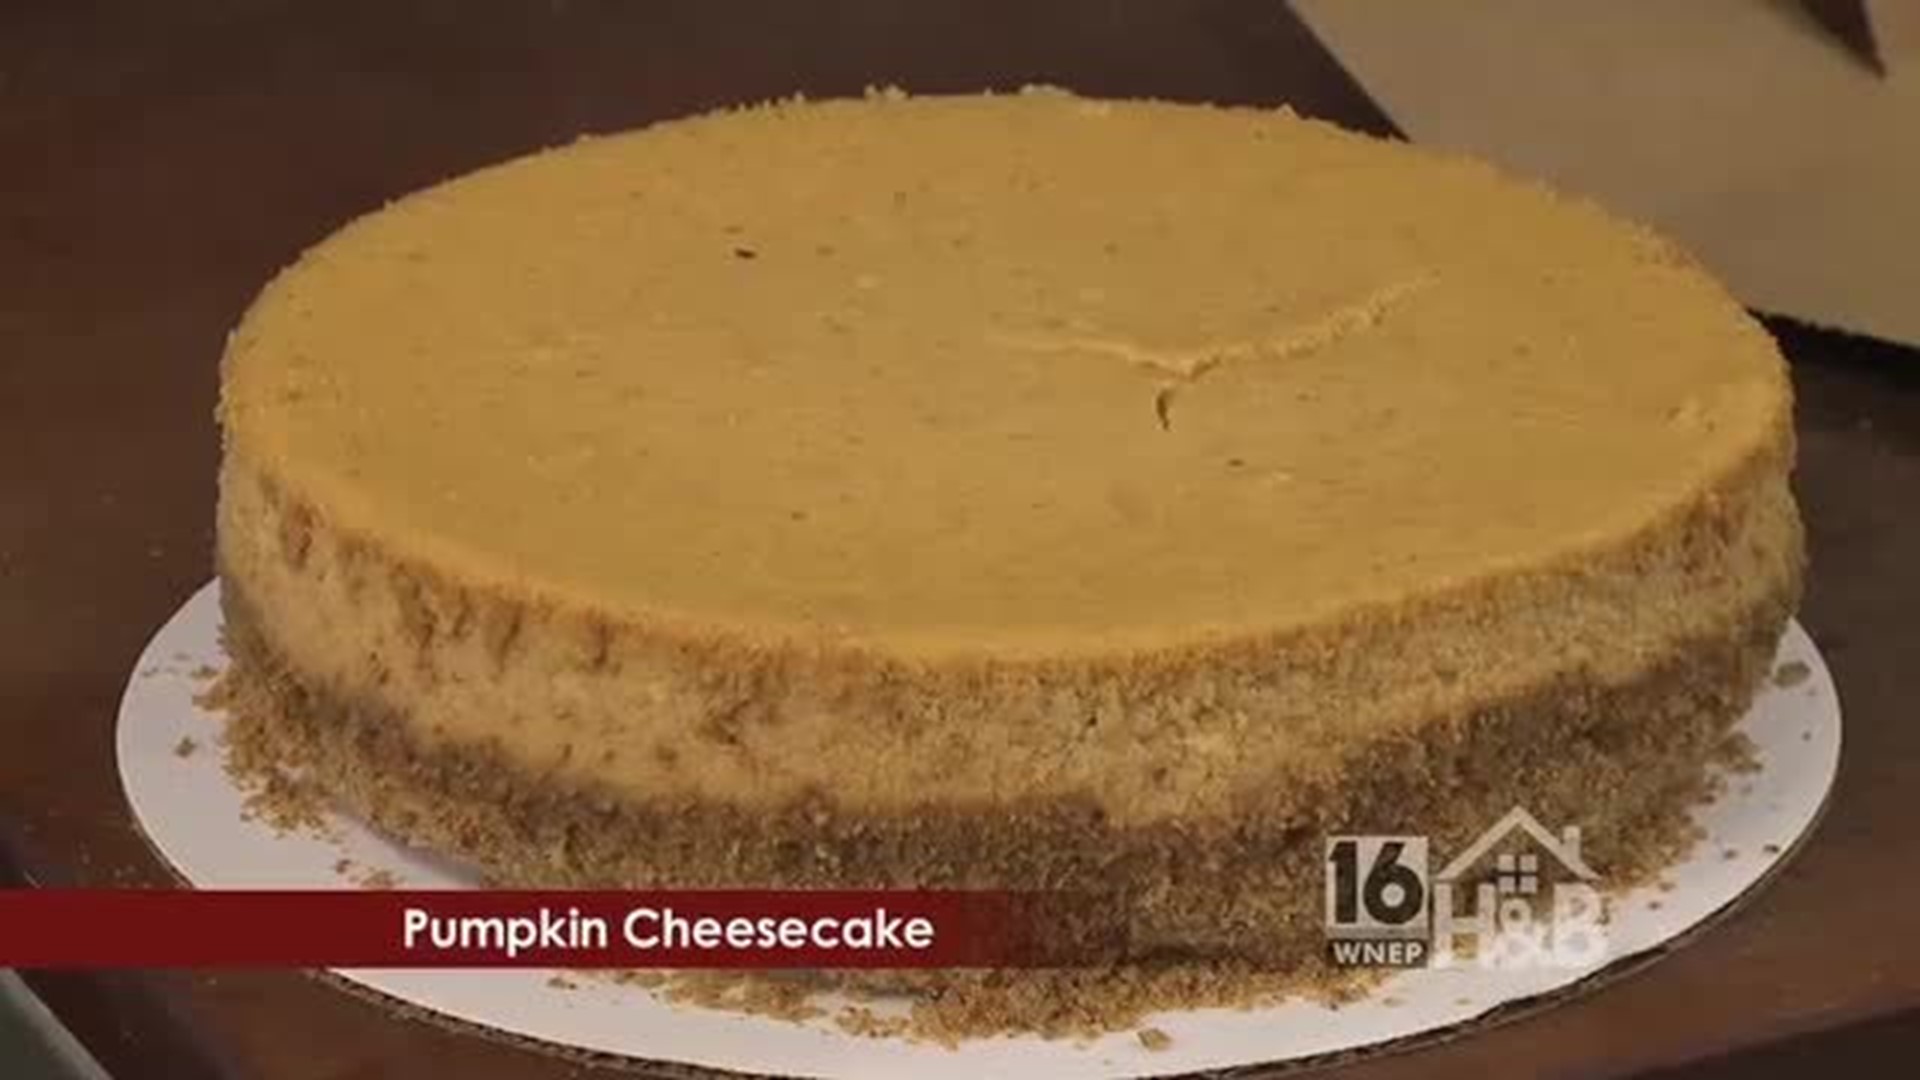 Country Cupboard's Pumpkin Cheesecake